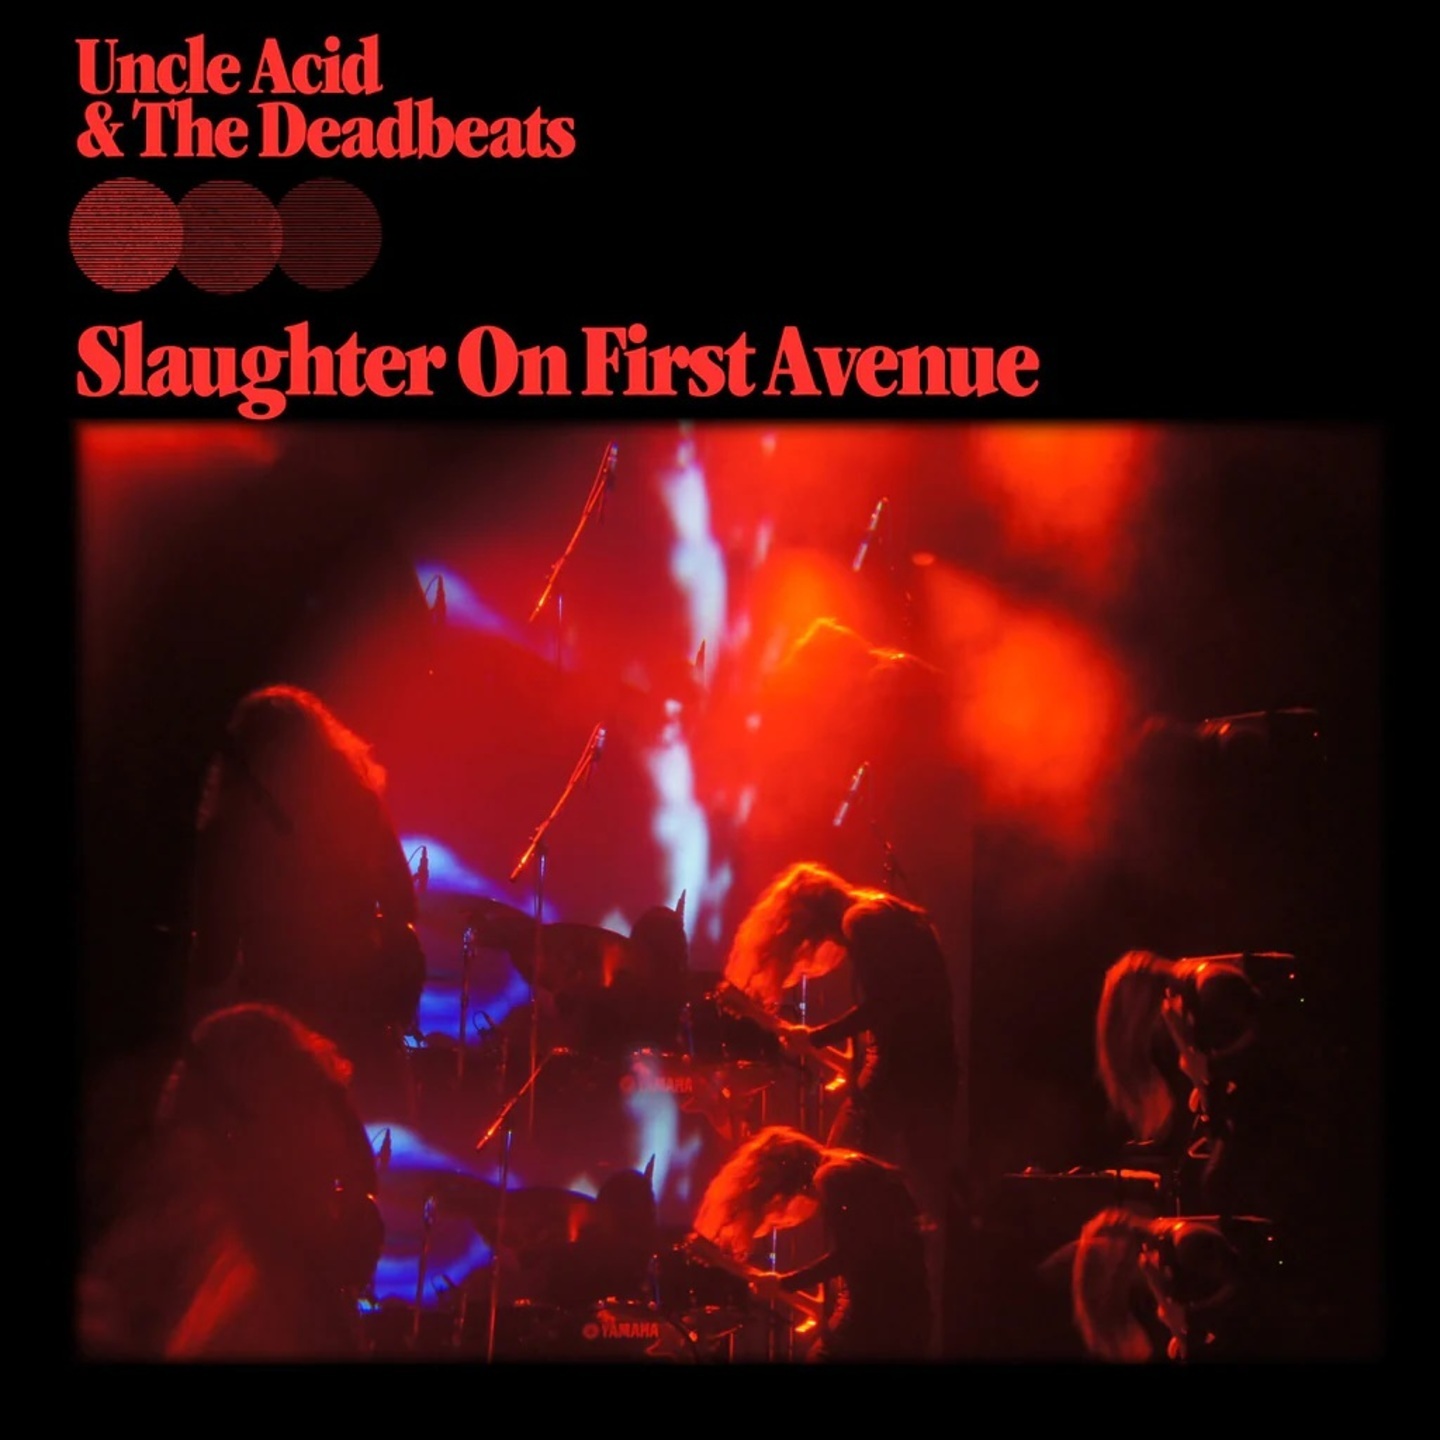 UNCLE ACID AND THE DEADBEATS - Slaughter on First Avenue 2xLP Orange Splatter vinyl